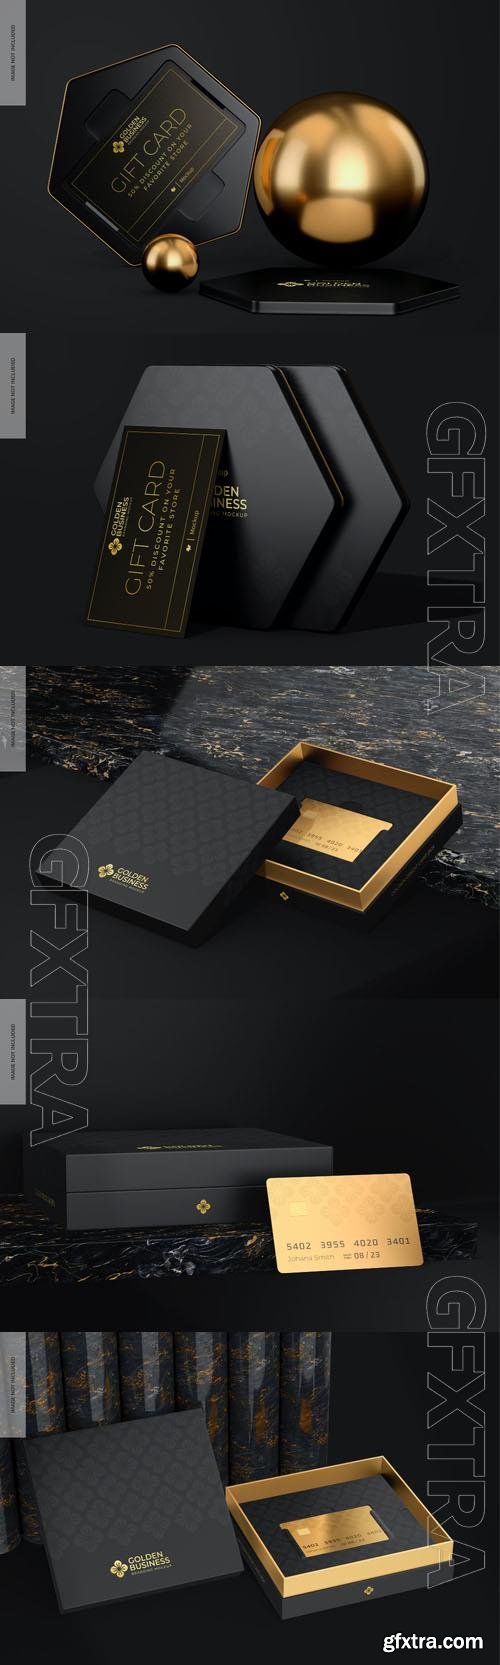 Golden credit card box psd template mockup